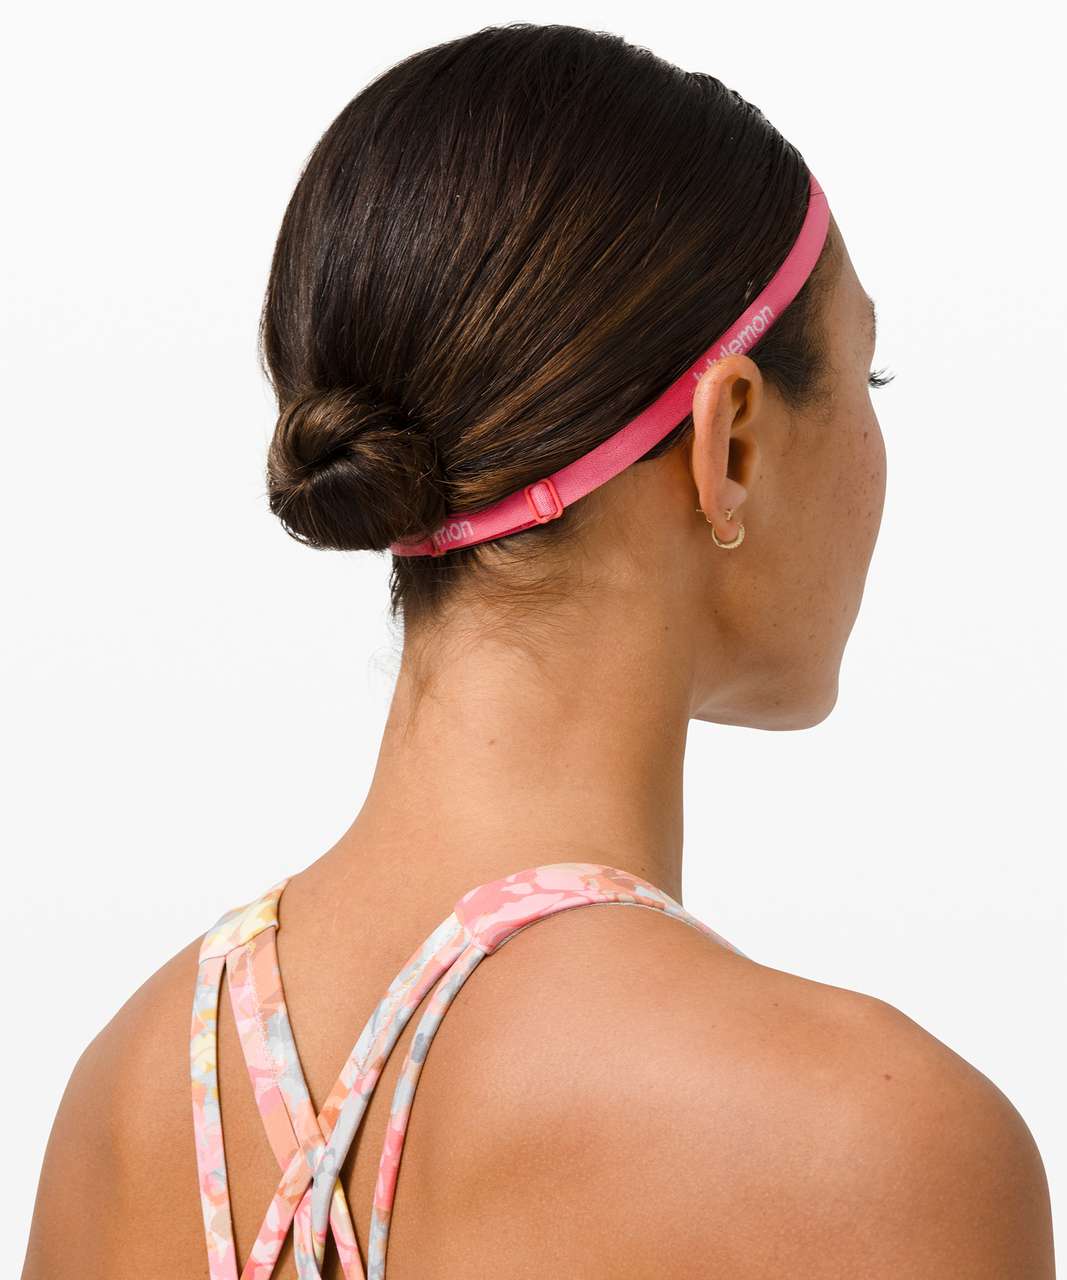 Lululemon Get in Line Headband *2 Pack - Guava Pink / Dark Terracotta